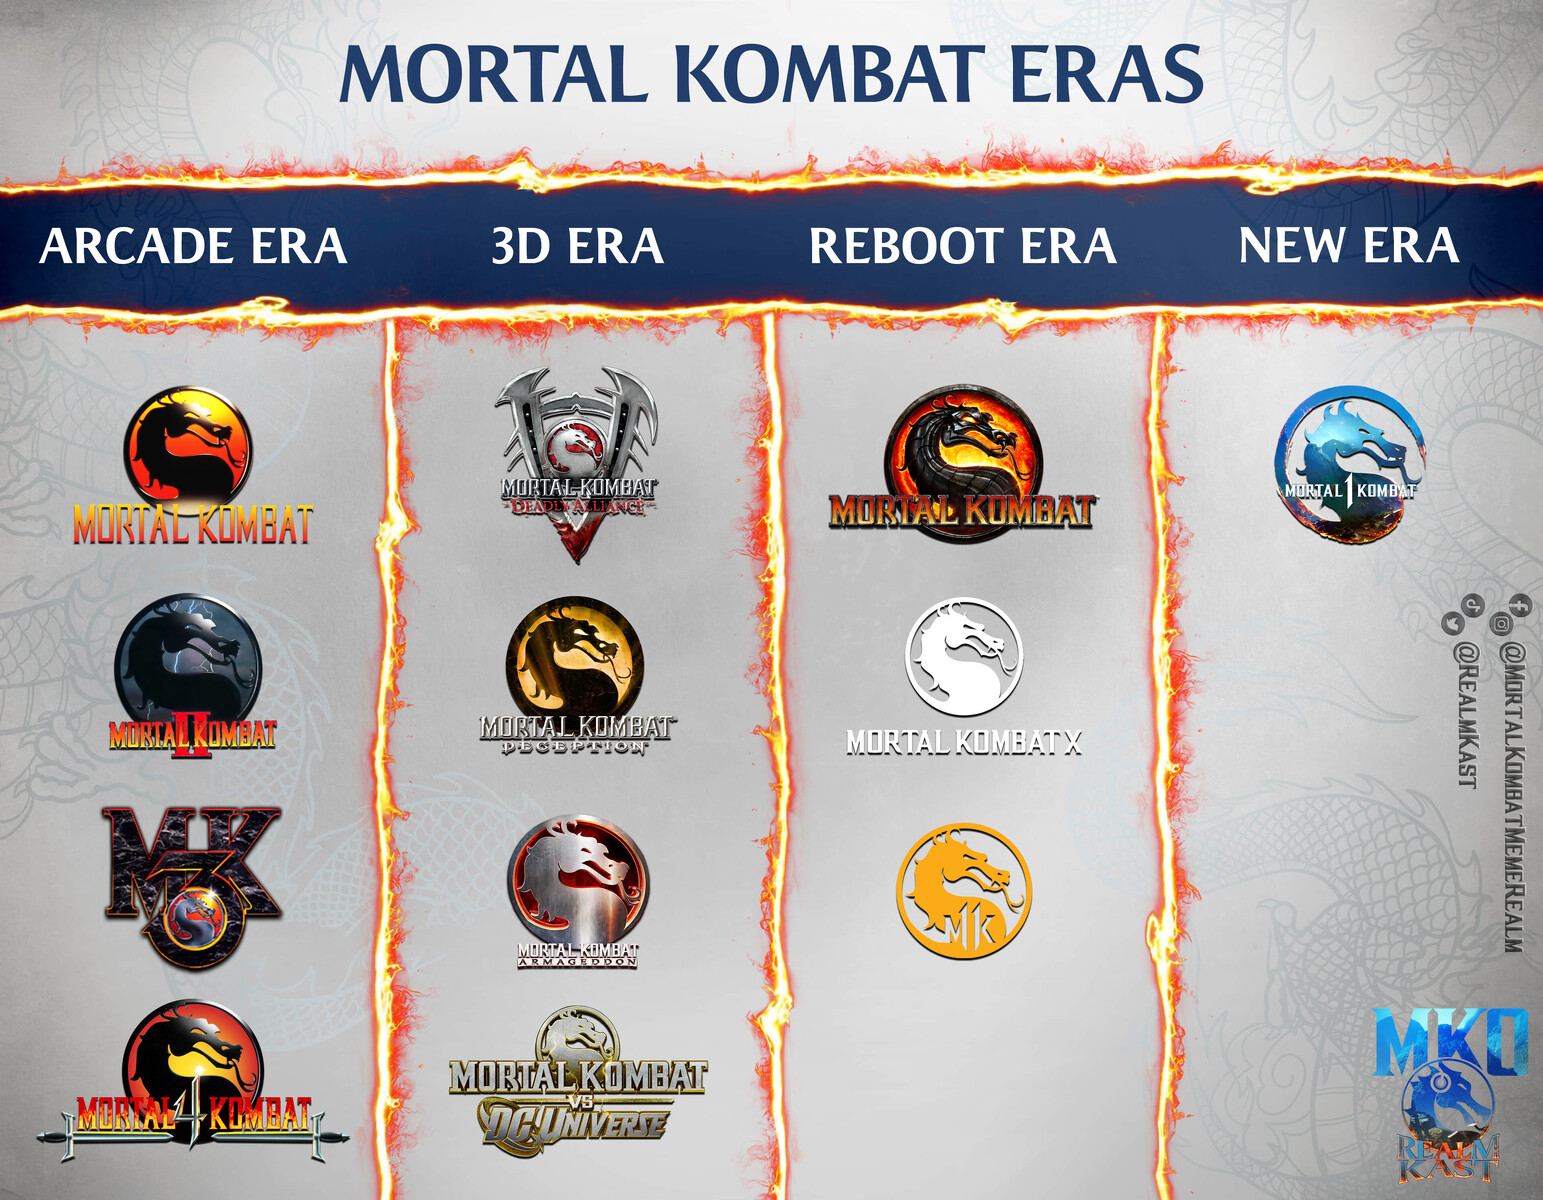 Mortal Kombat 2 (SNES) ALL FATALITIES : r/MortalKombat